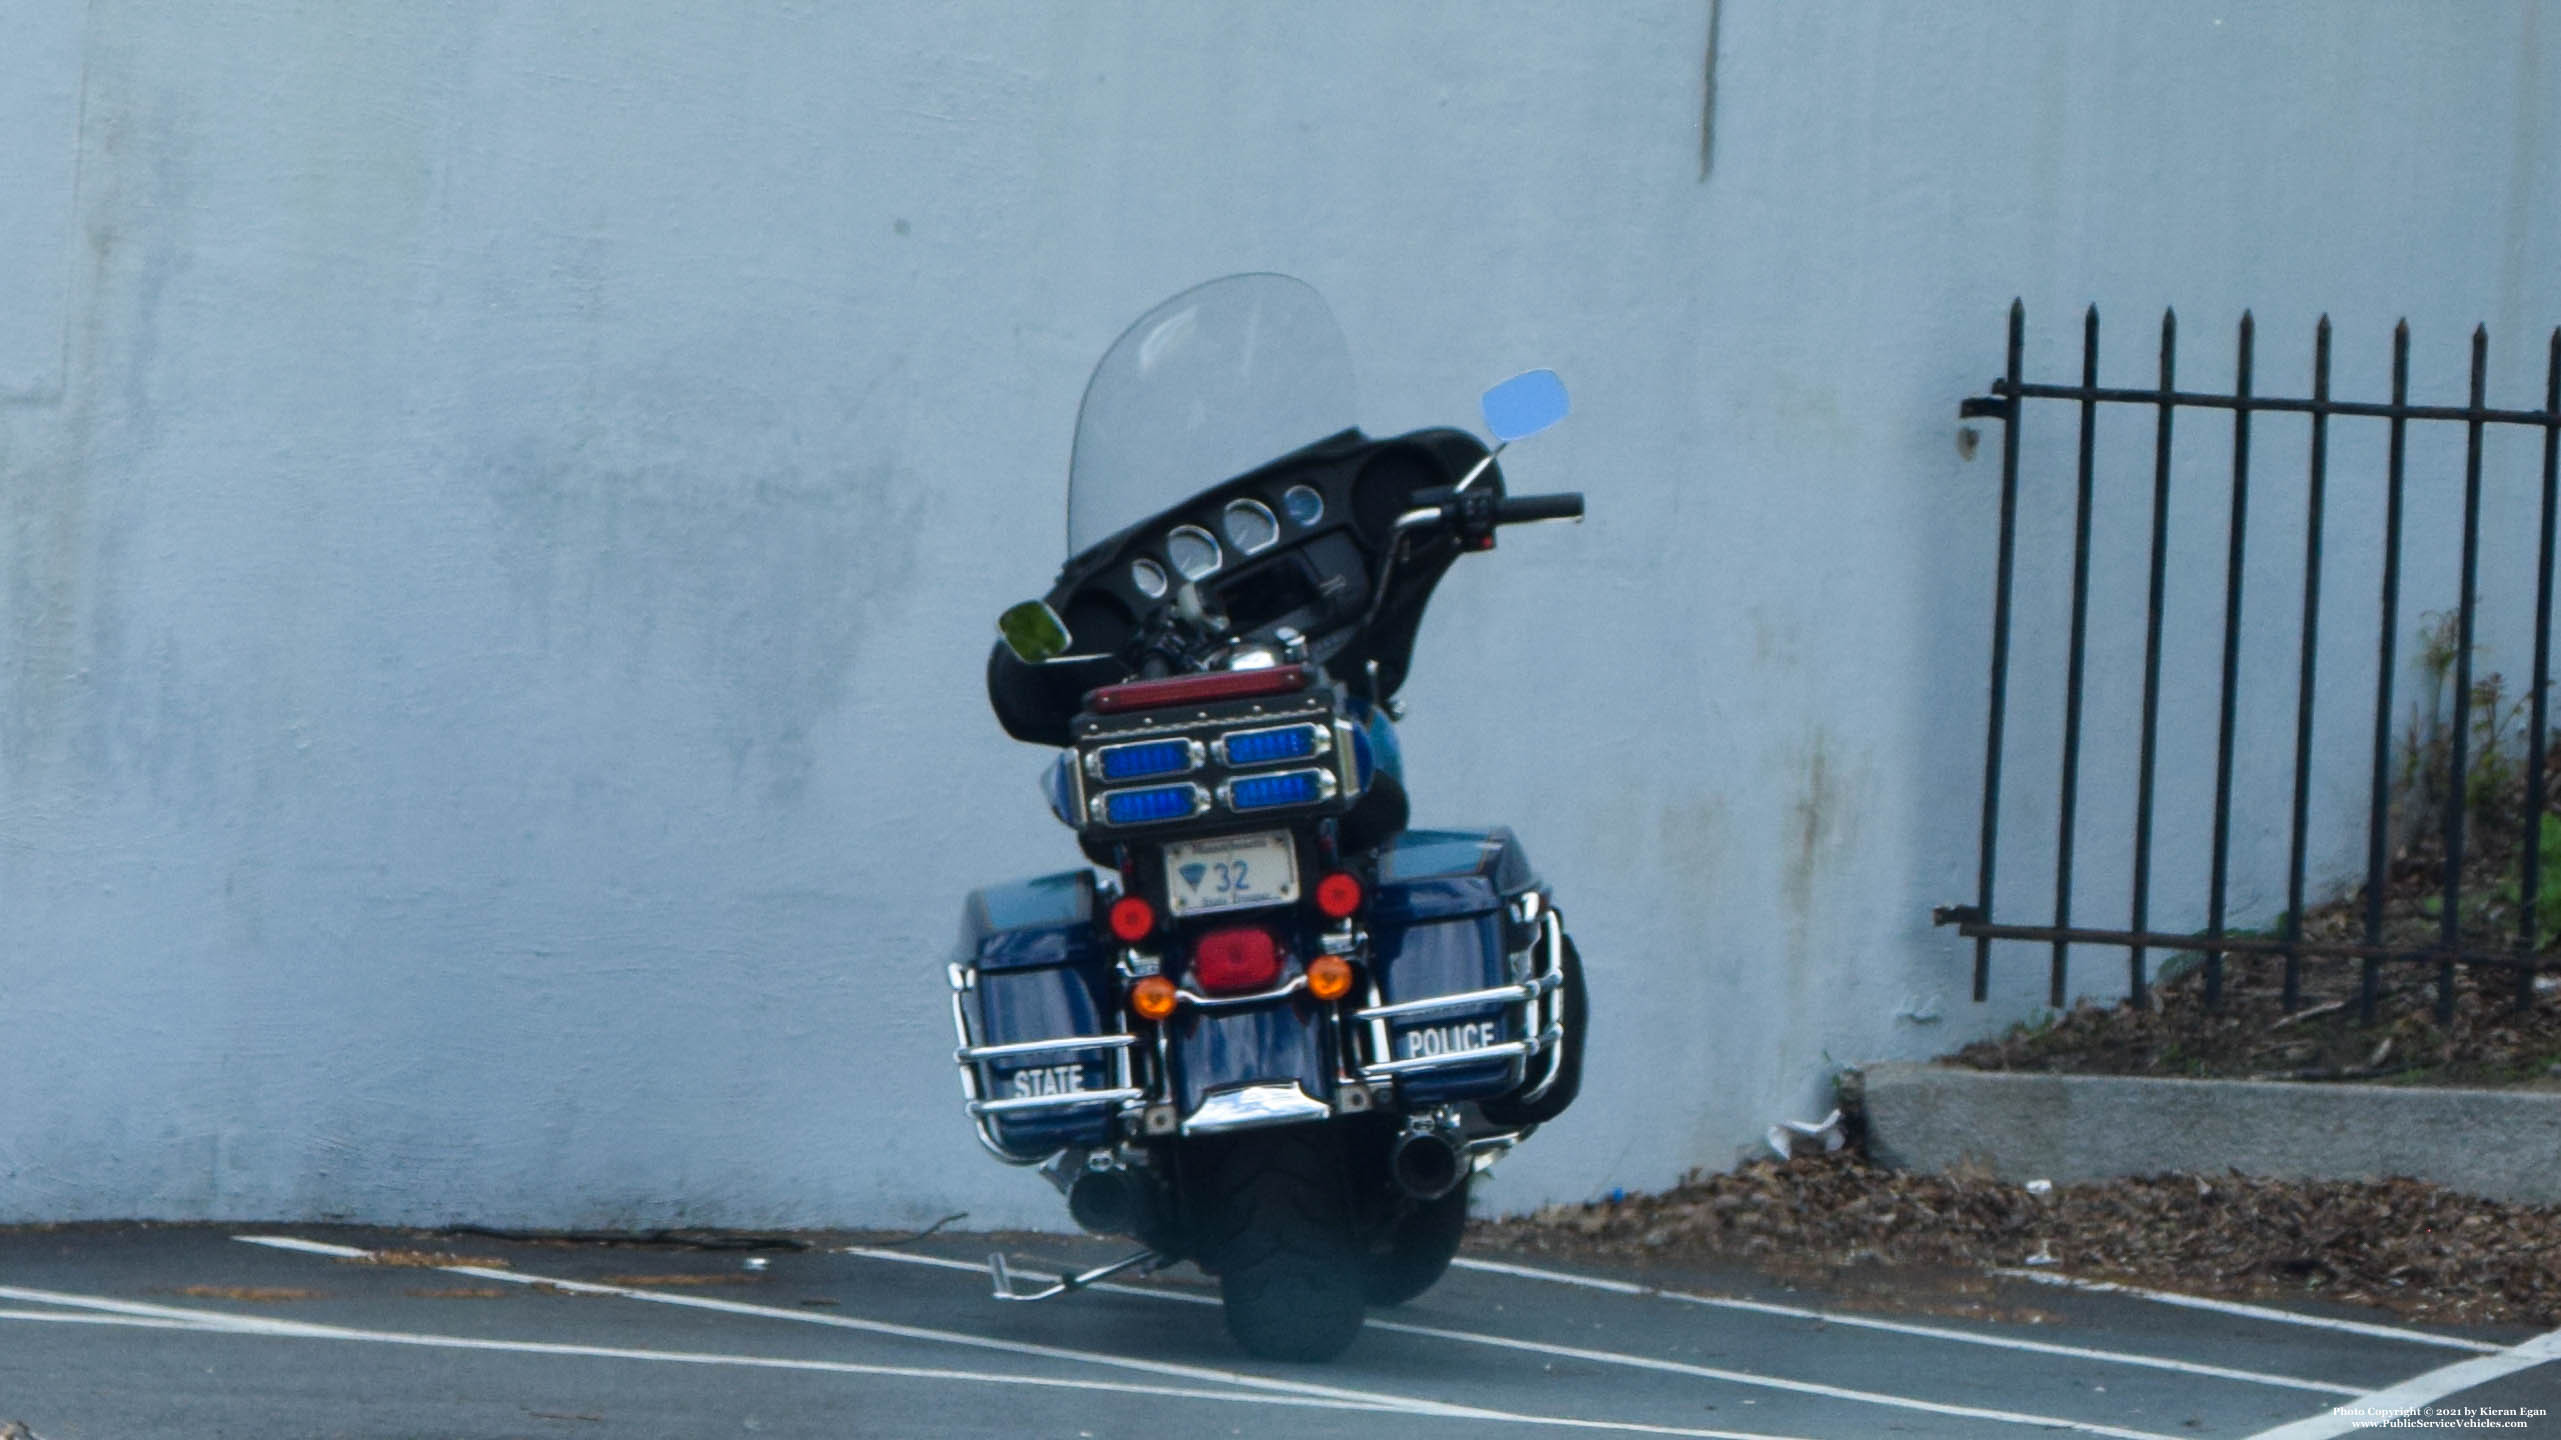 A photo  of Massachusetts State Police
            Motorcycle 32, a 2019 Harley Davidson Electra Glide             taken by Kieran Egan